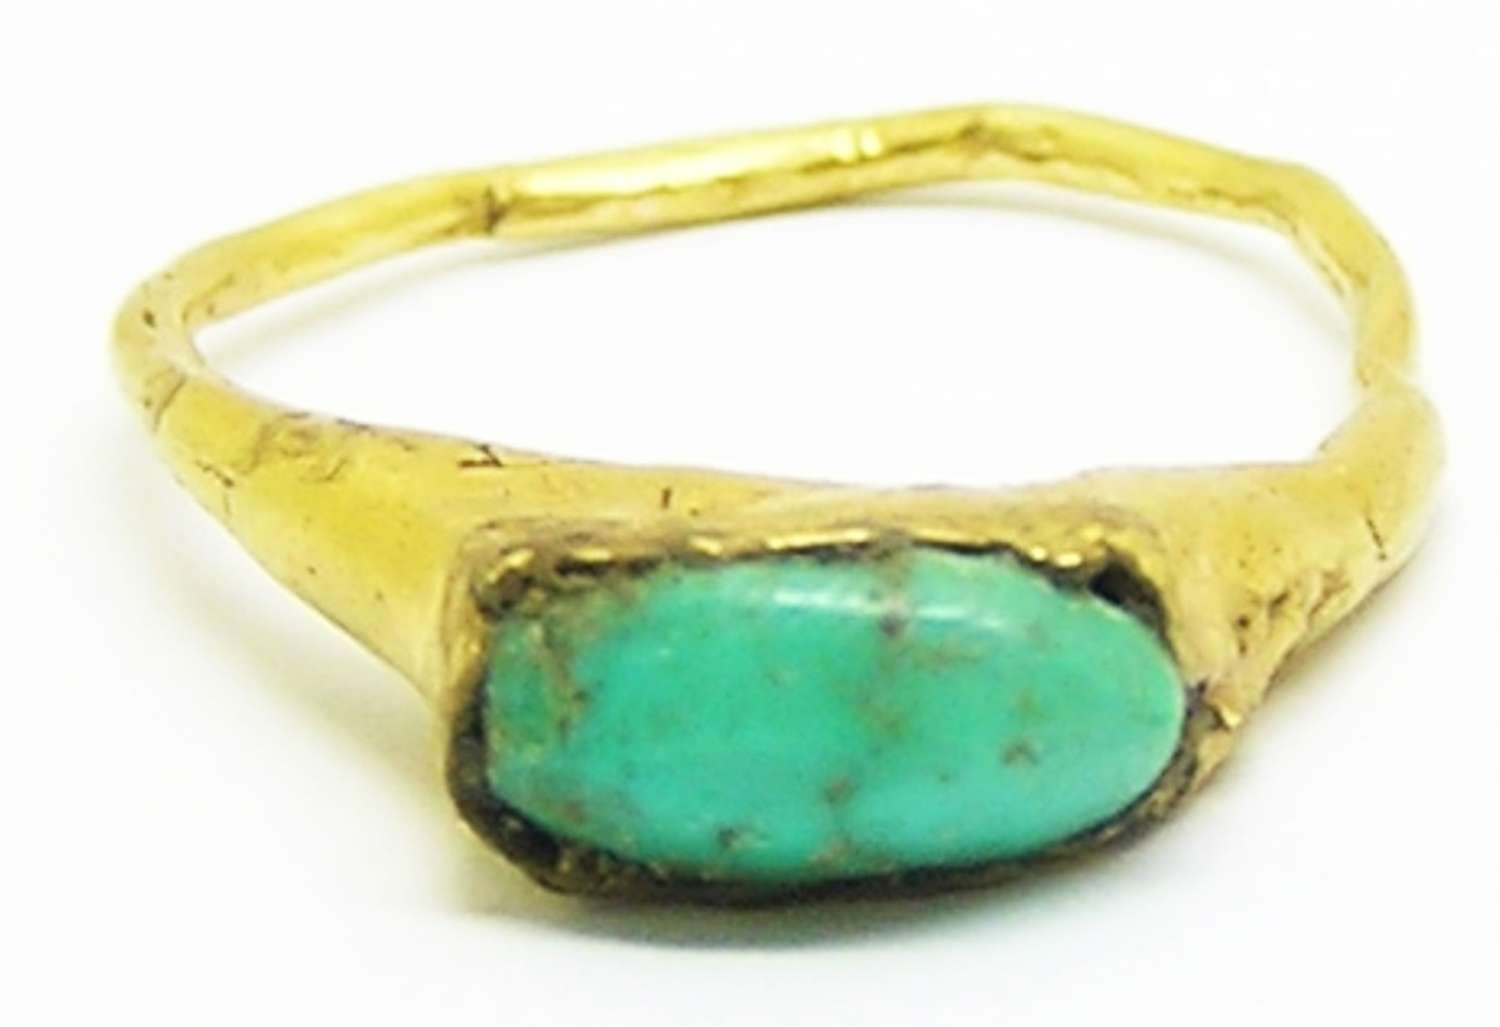 Medieval Gold & Turquoise Finger Ring